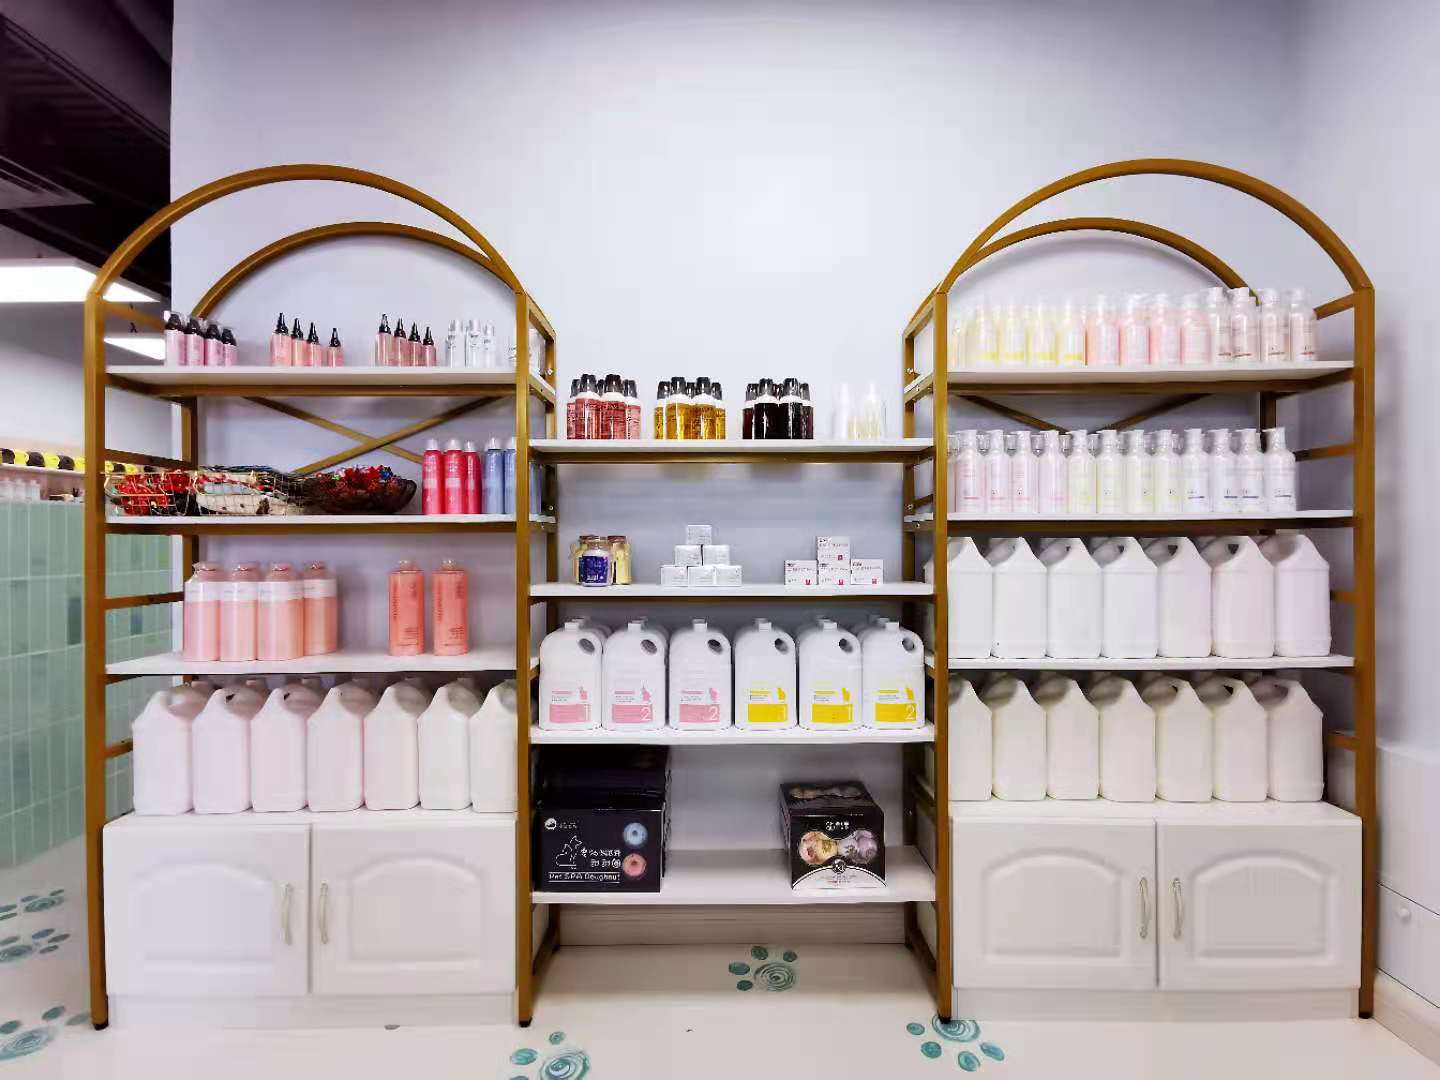 a shelf with a variety of pet shampoos